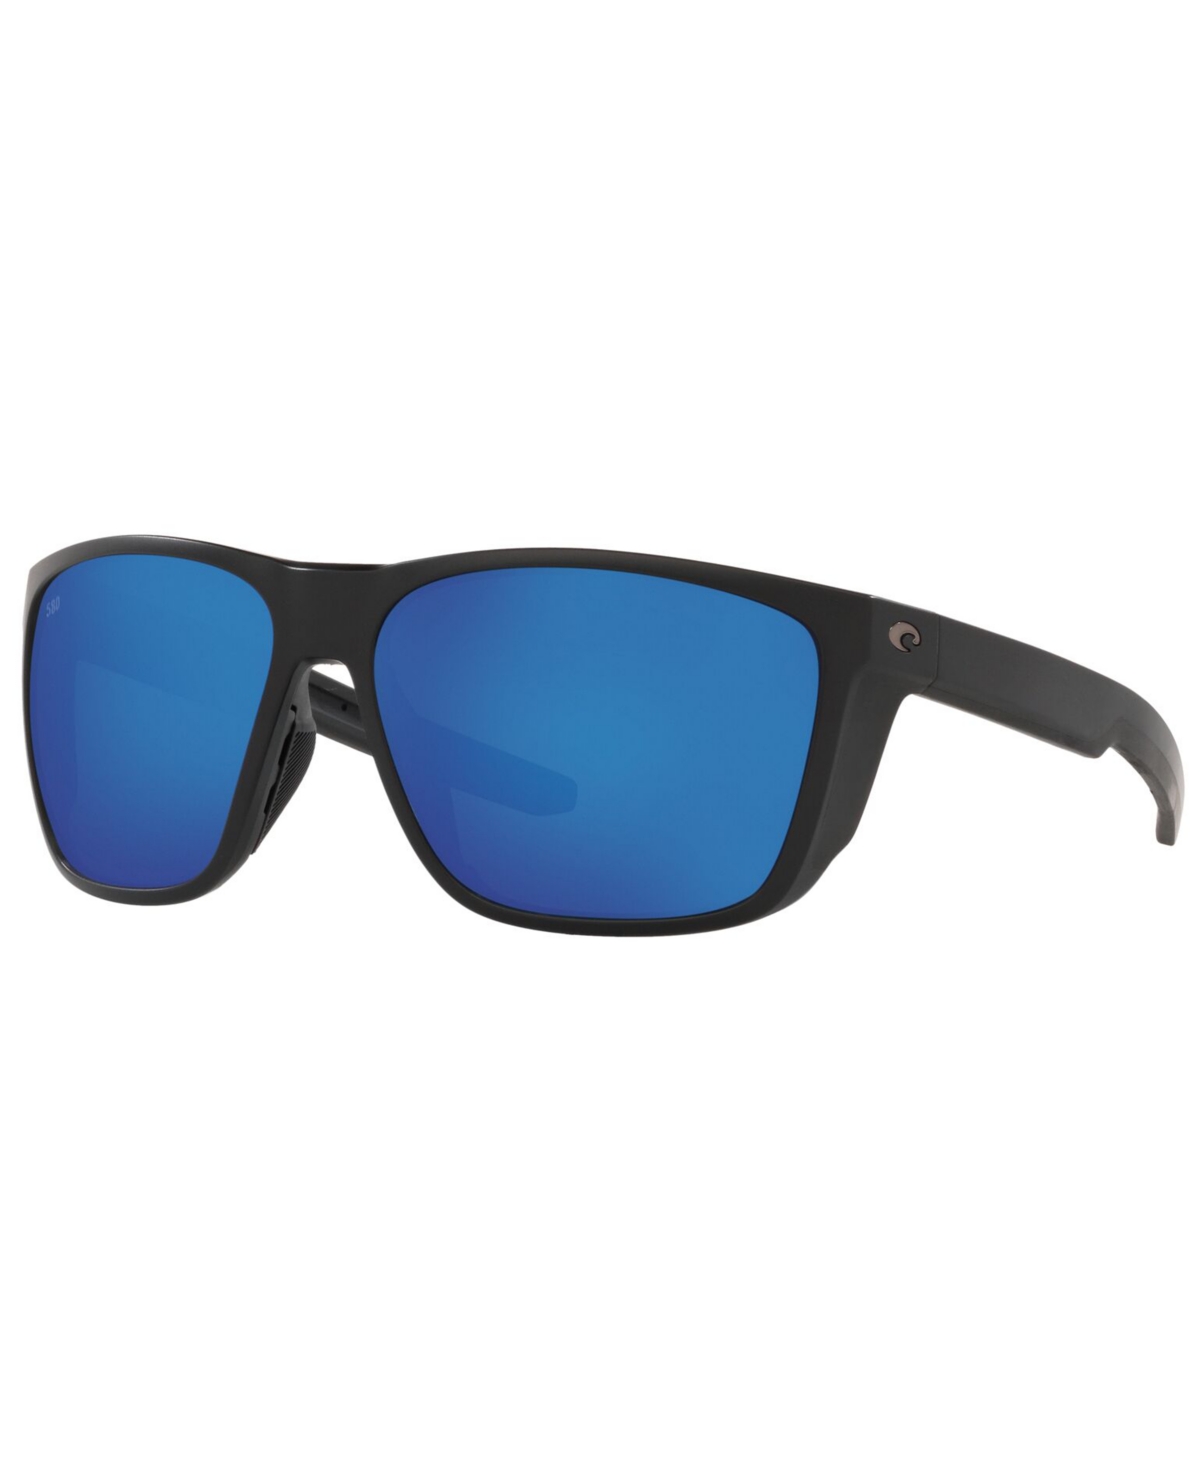 Costa Del Mar 62mm Square Sunglasses in Black Blue at Nordstrom -  06S9012 901201